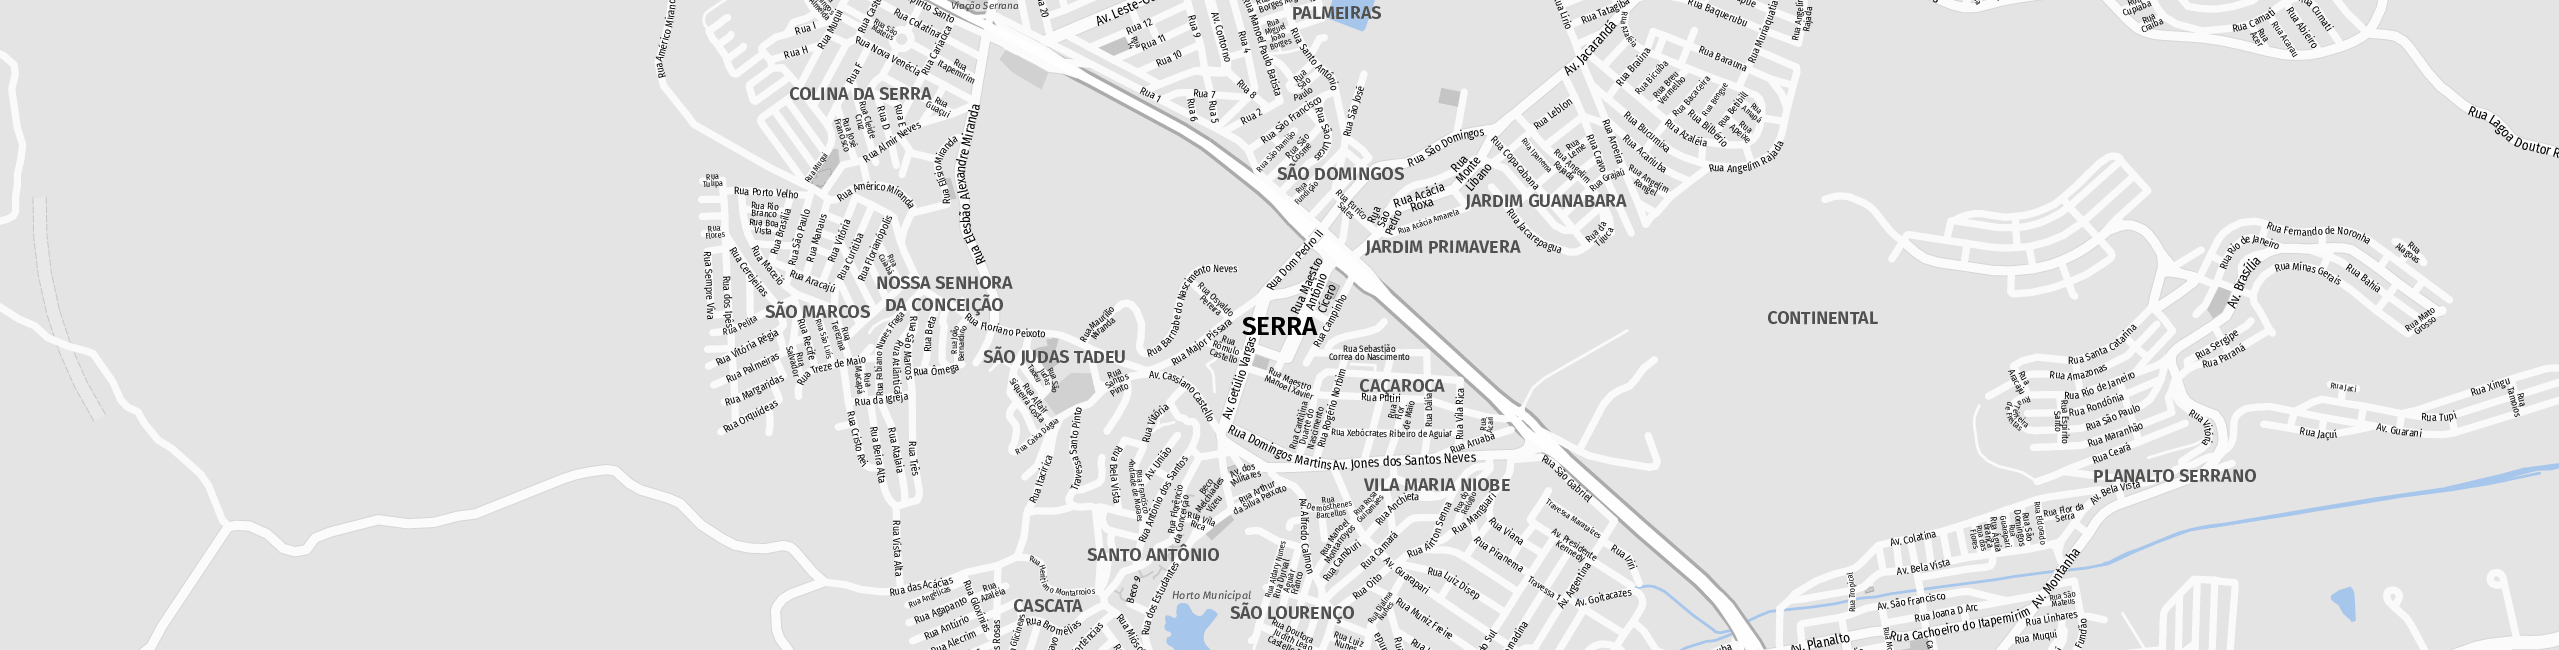 Stadtplan Serra zum Downloaden.